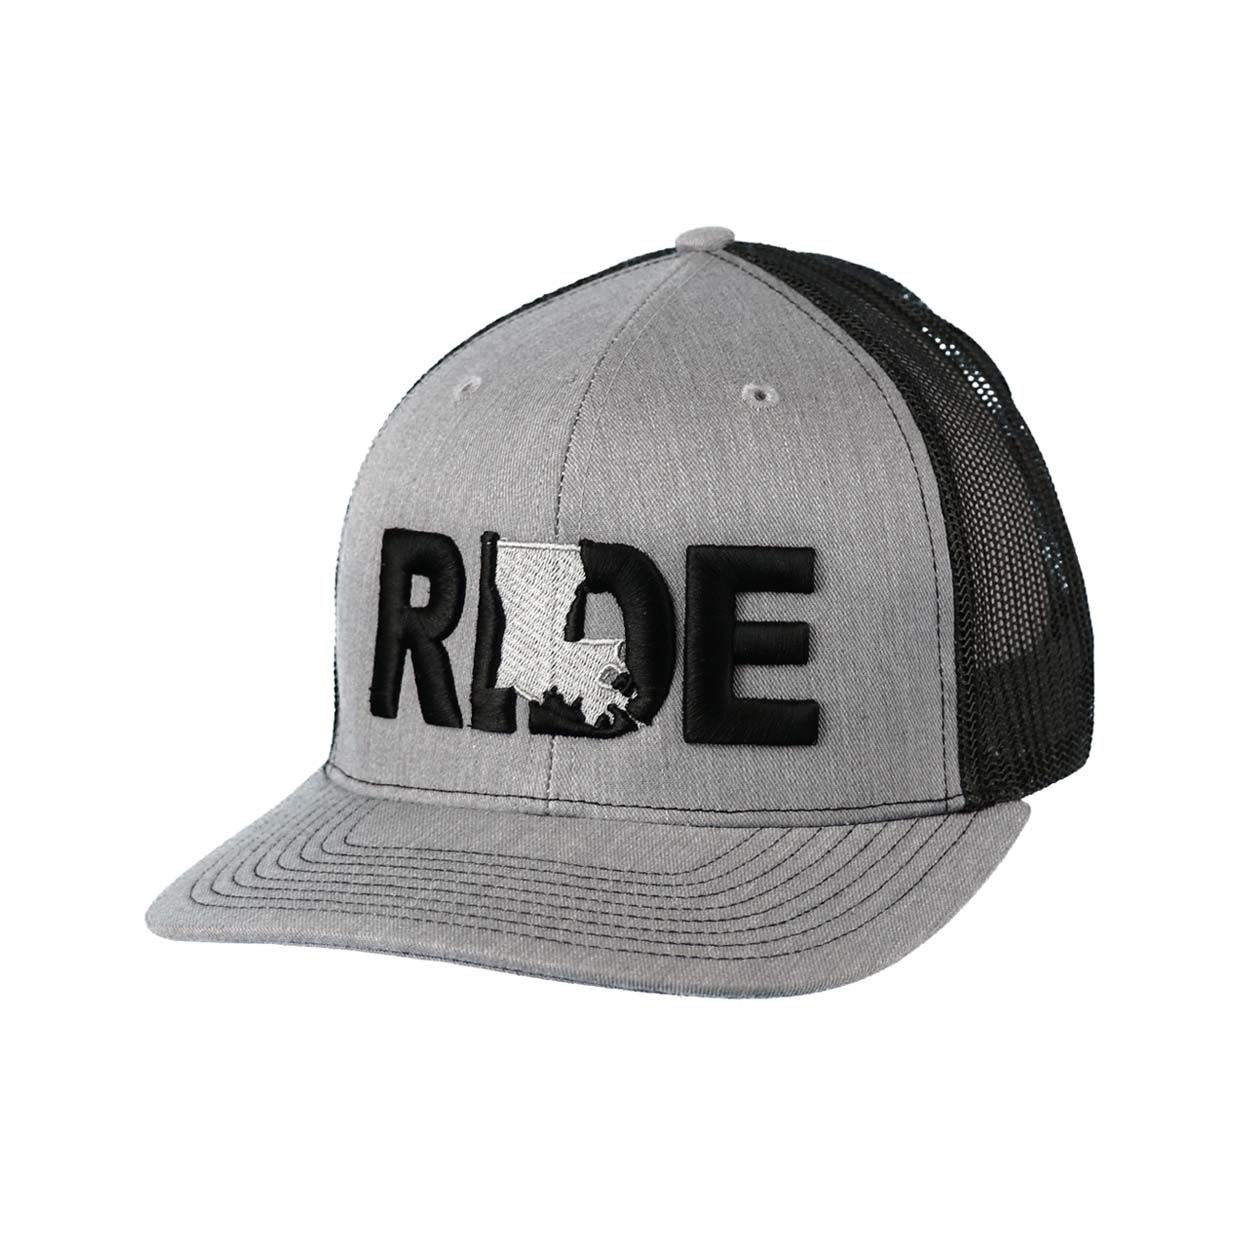 Ride Louisiana Classic Embroidered Snapback Trucker Hat Heather Gray/Black